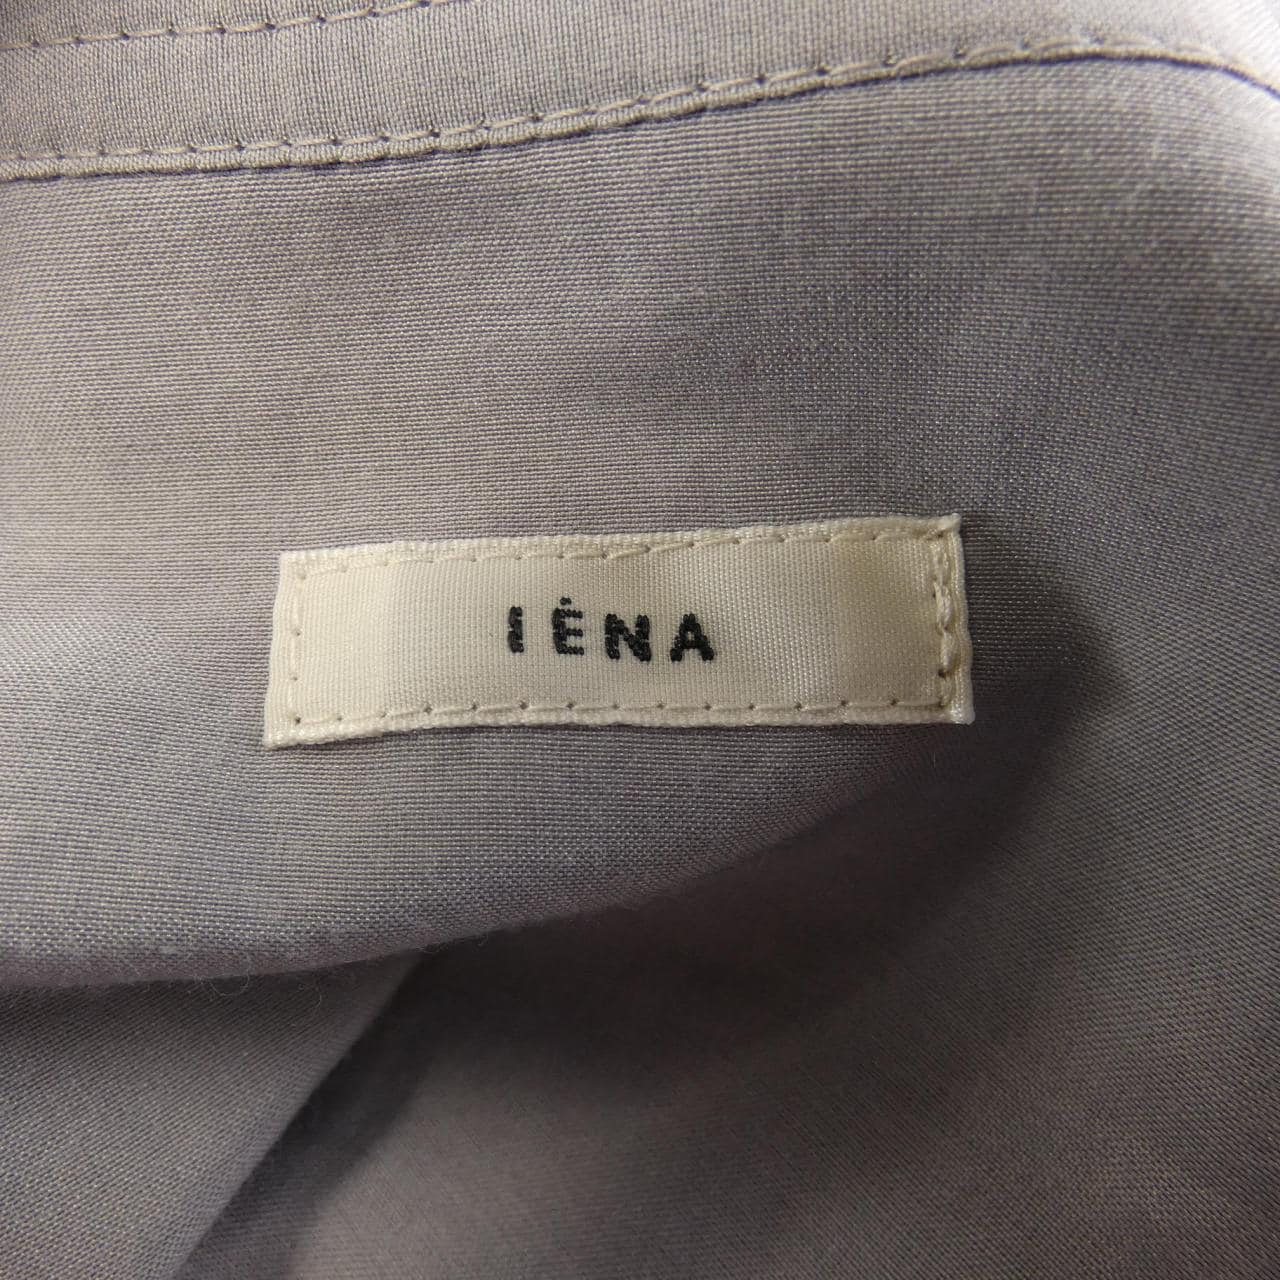 Jena IENA dress